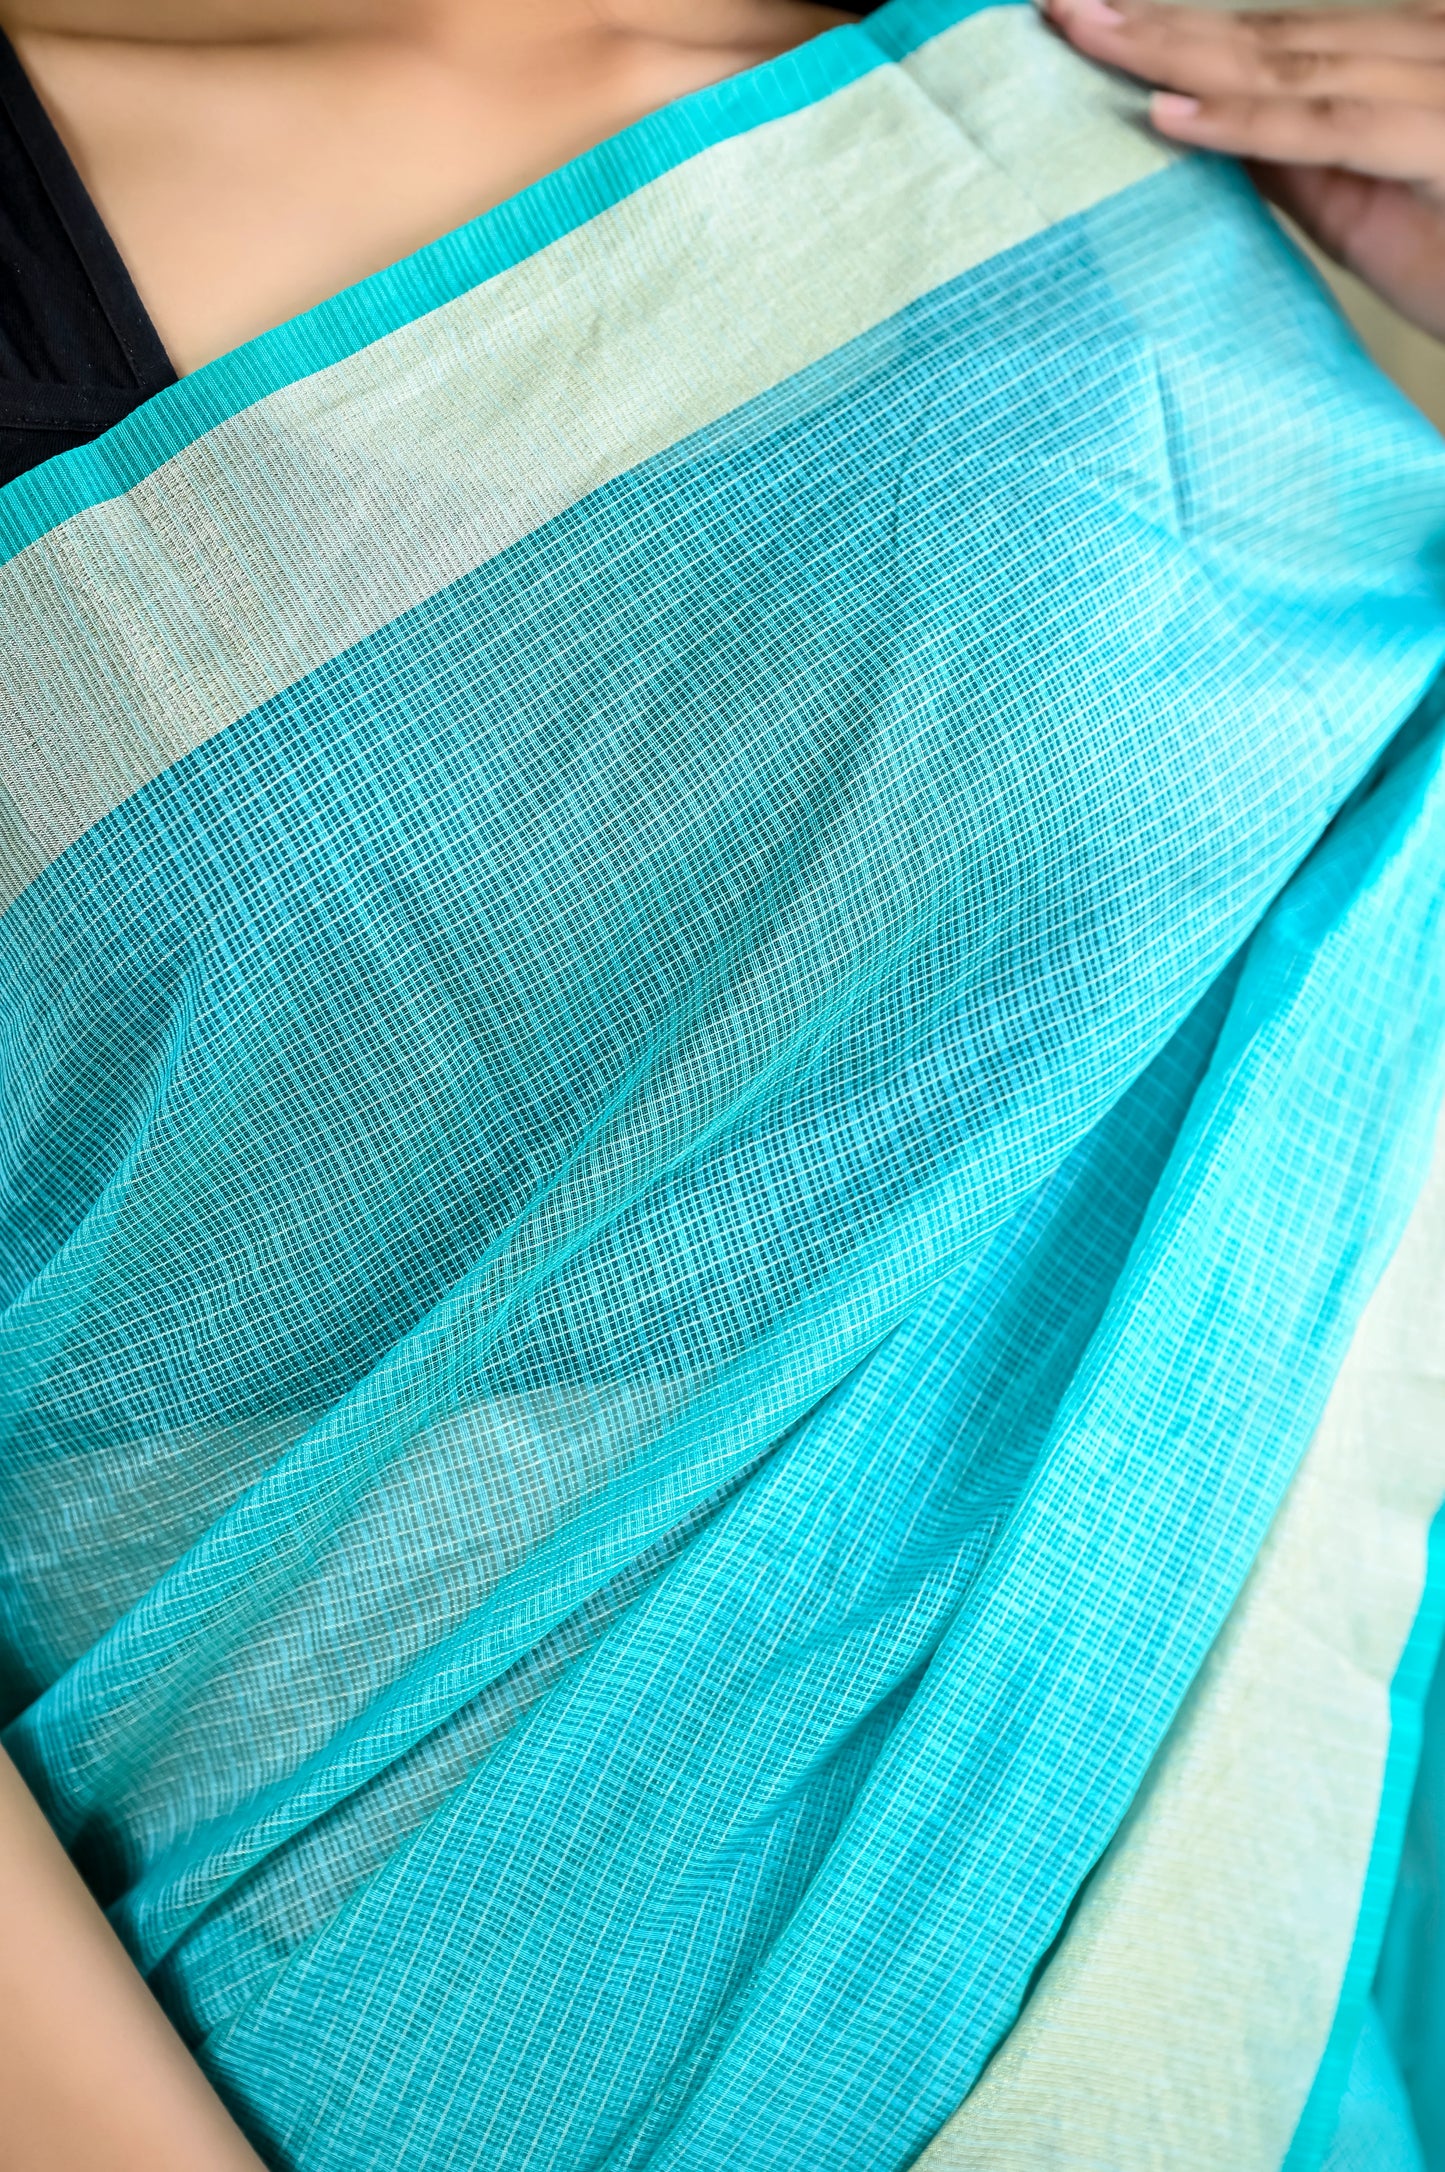 Turquoise color kota silk saree with golden border